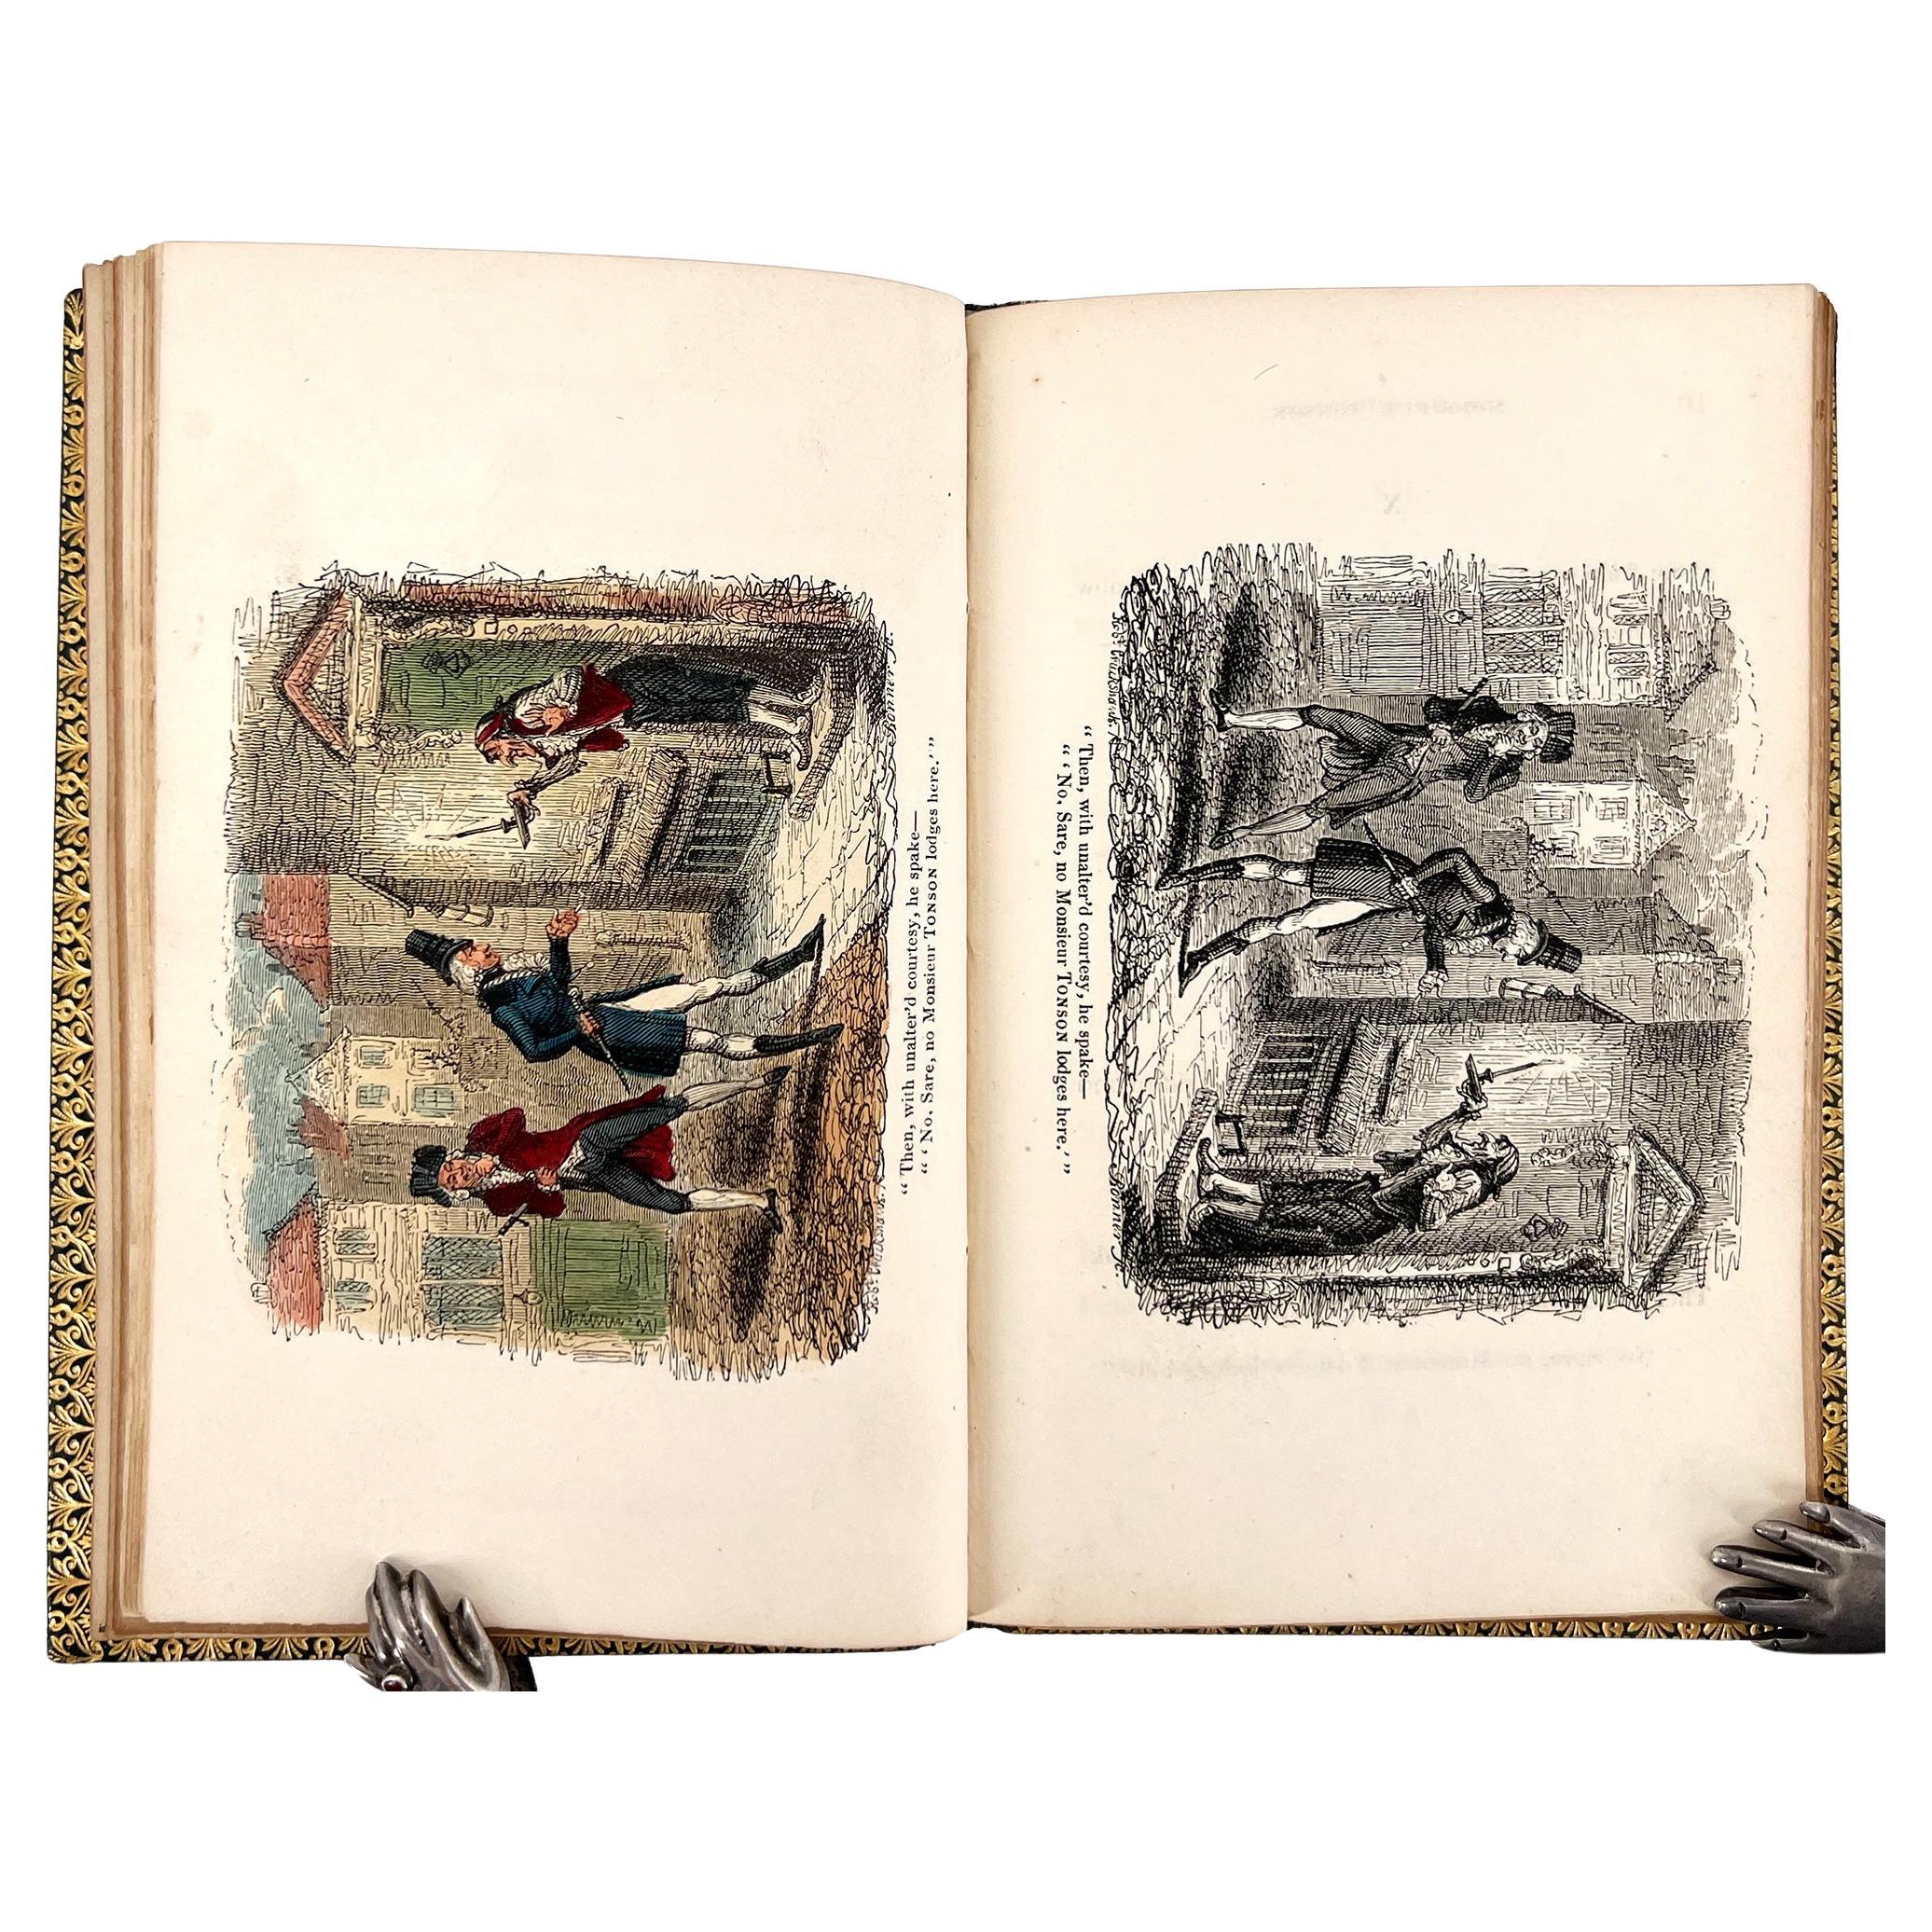 Monsieur Tonson by J. Taylor, illustrations by Robert CRUIKSHANK